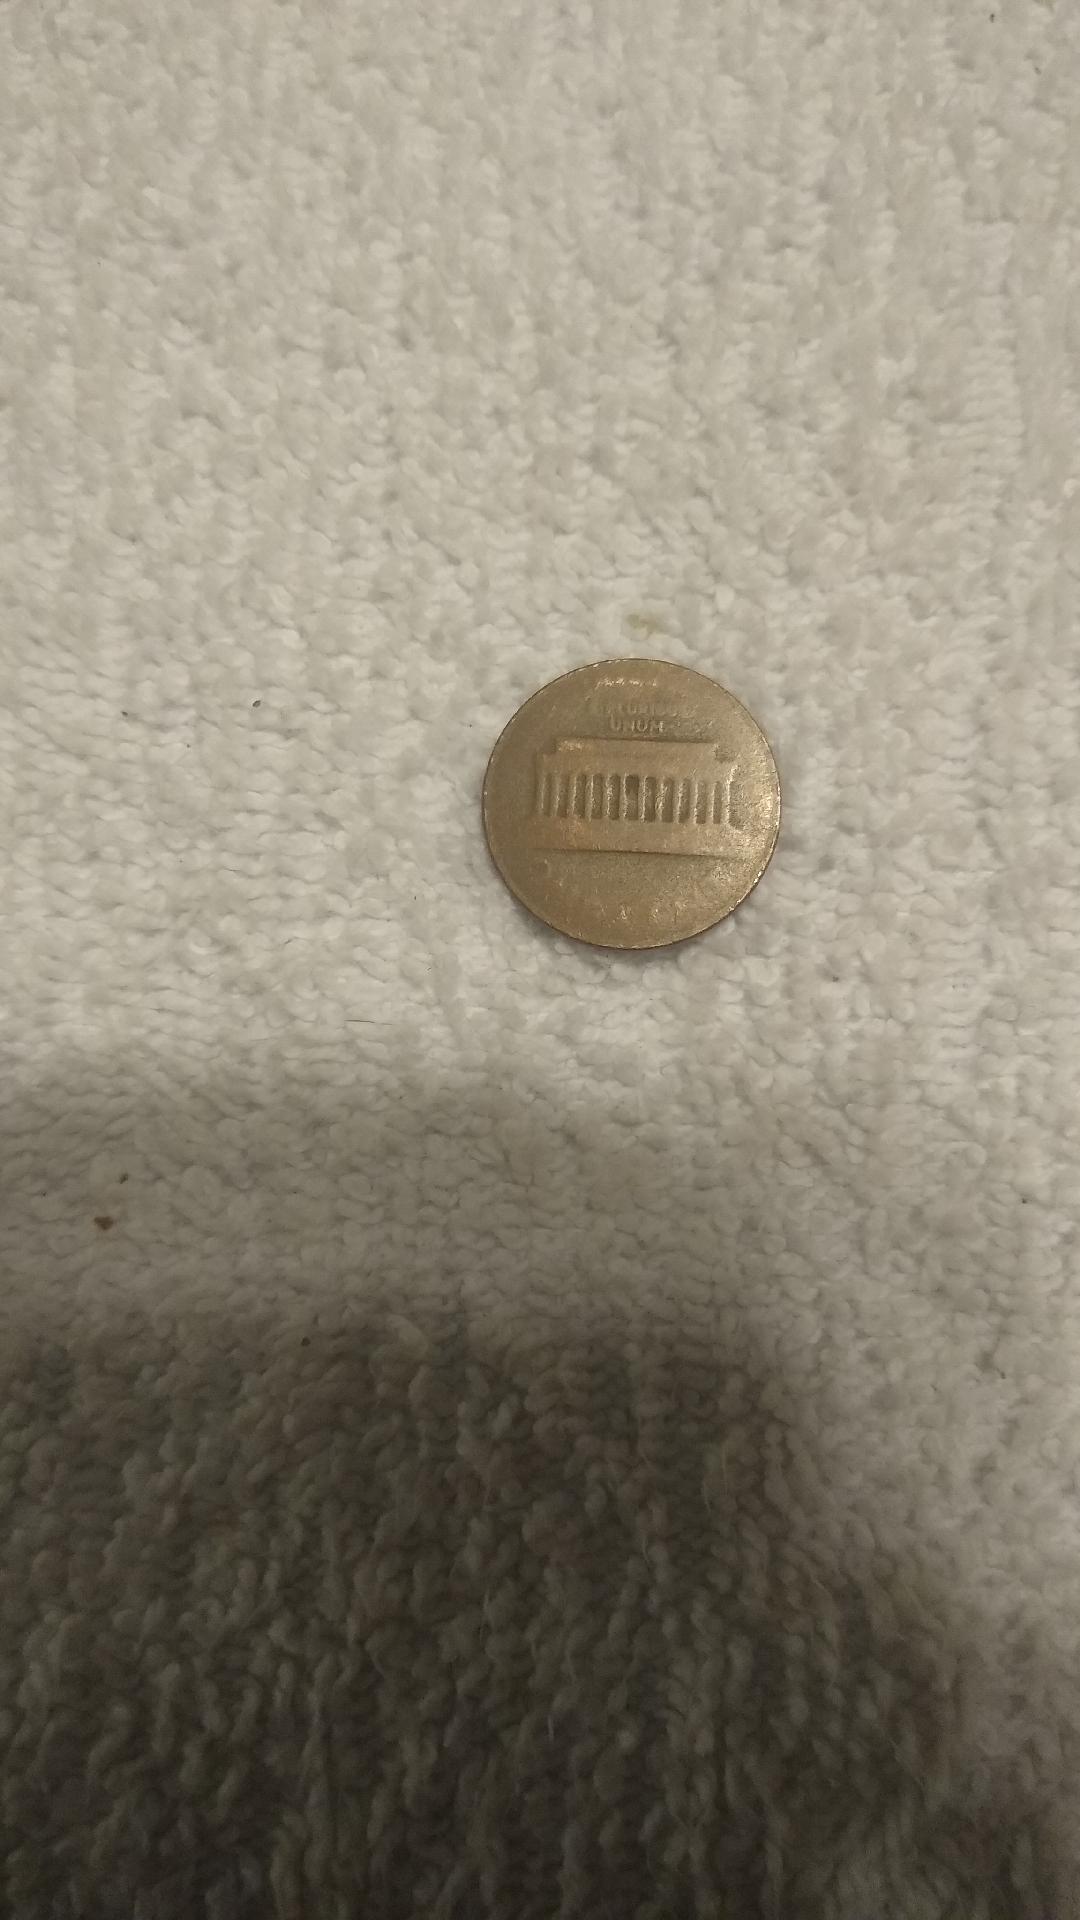 worn penny back 4.jpg